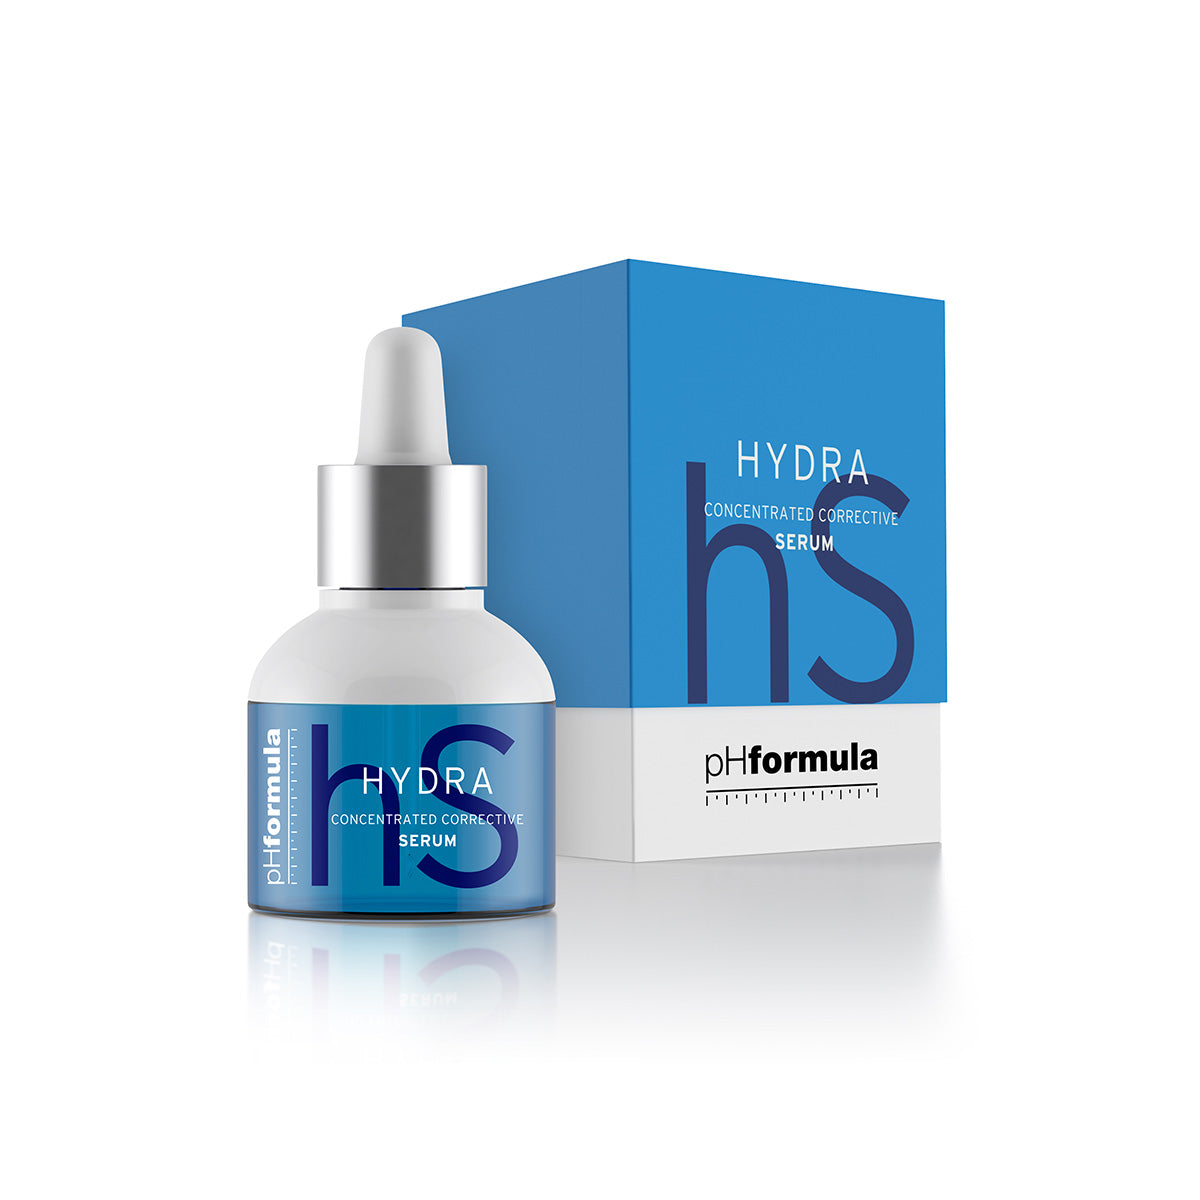 phformula hydra concentrated corrective serum